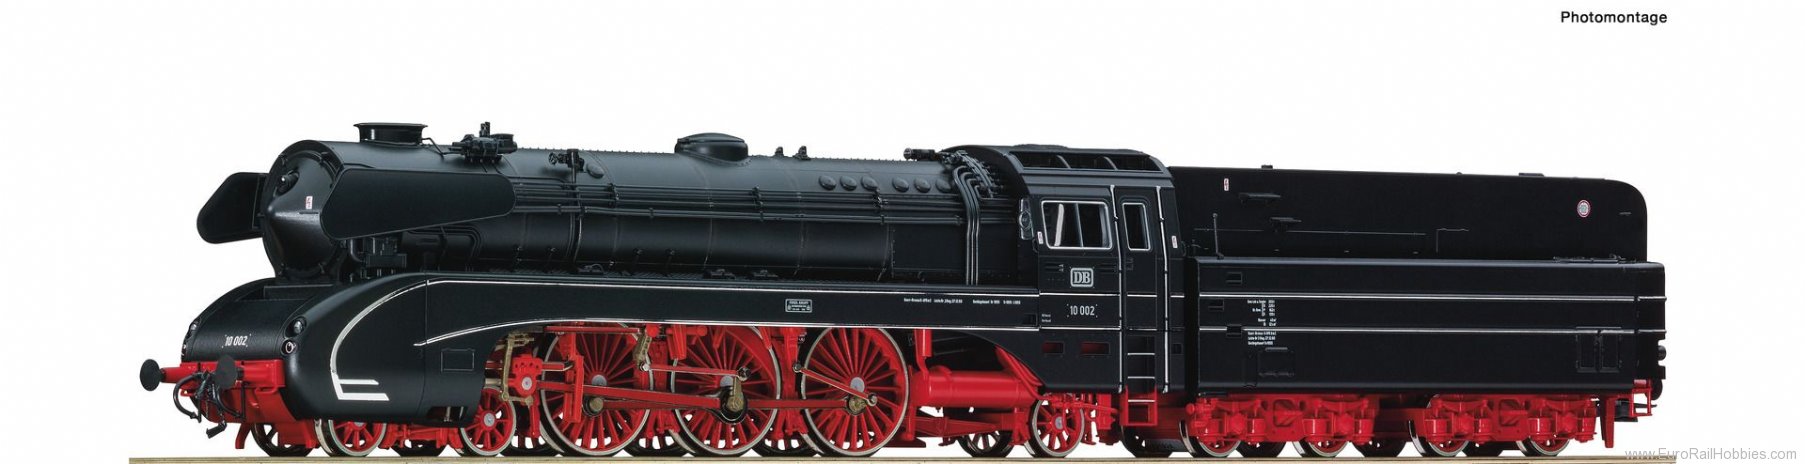 Roco 78191 DB Steam locomotive 10 002, (Marklin AC Digit